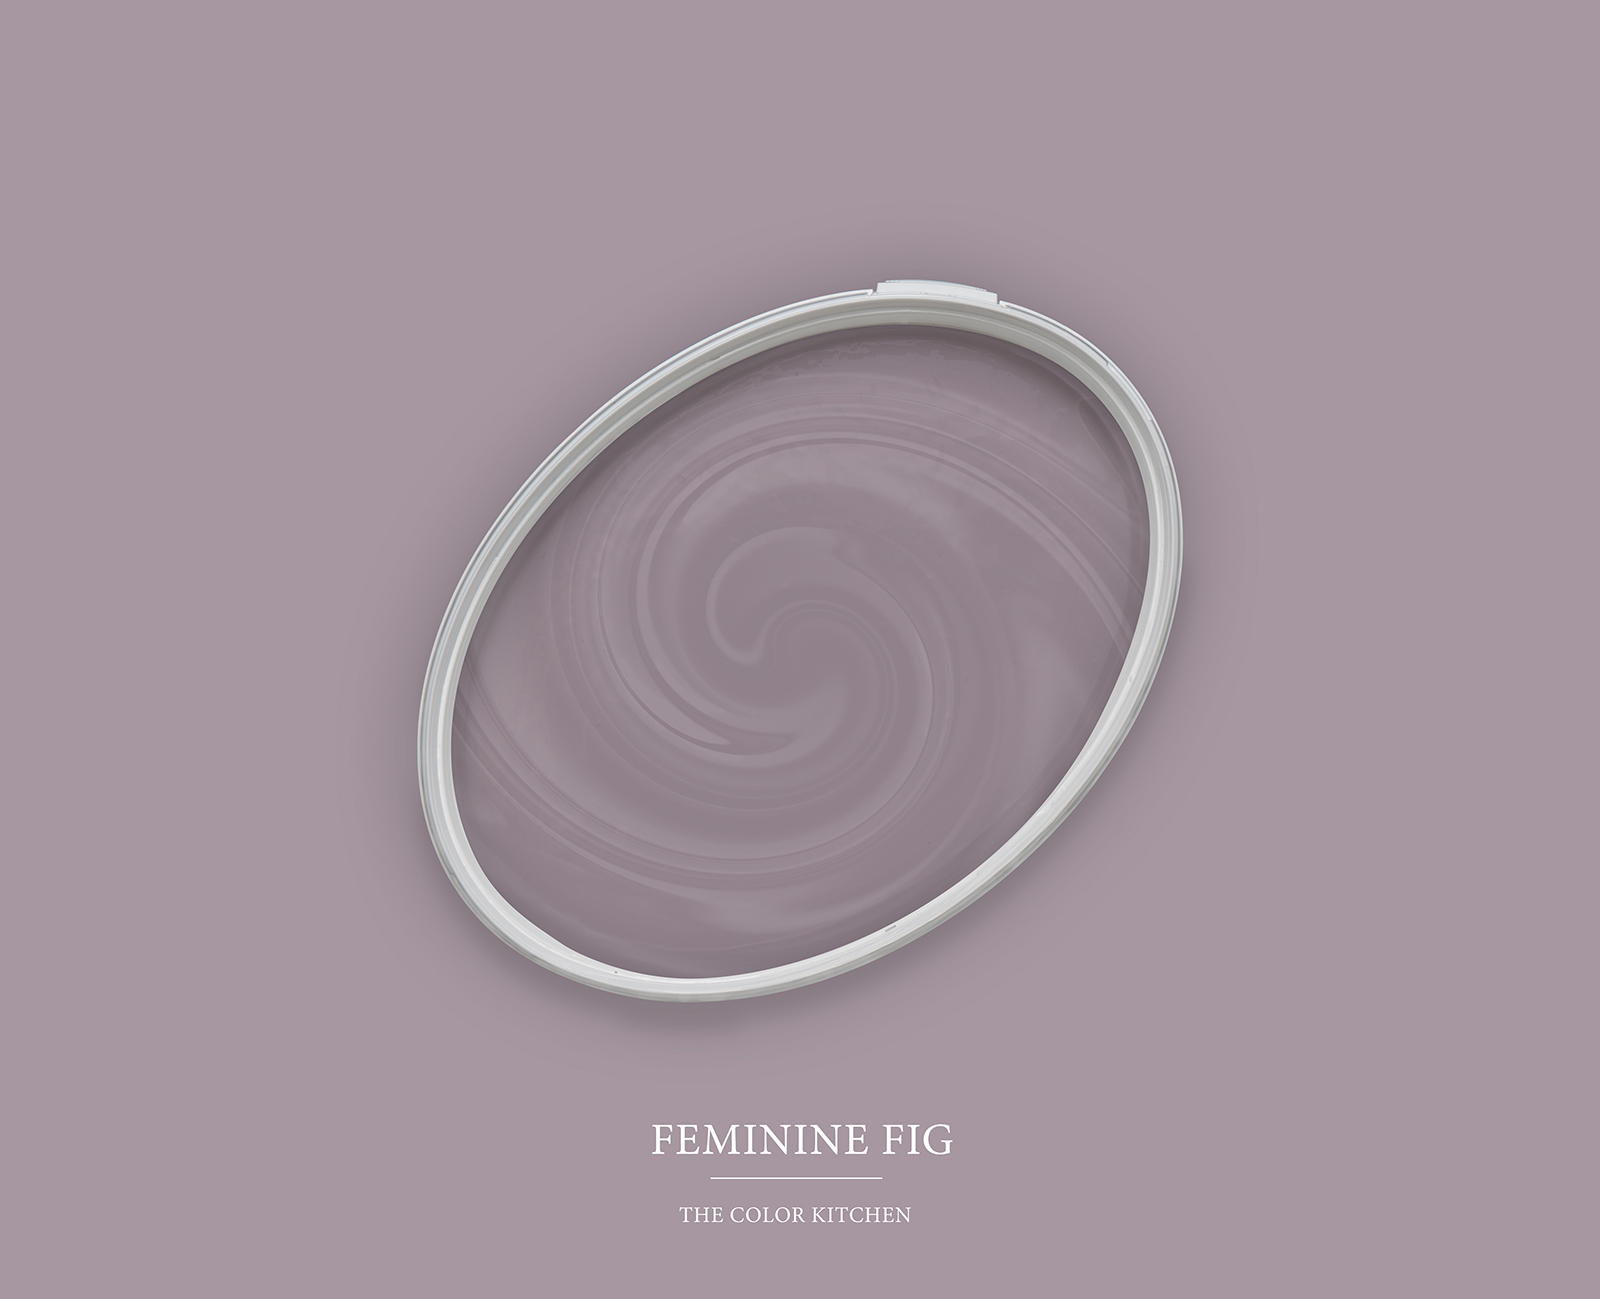         Wall Paint TCK2005 »Feminine Fig« in warm mauve – 2.5 litre
    